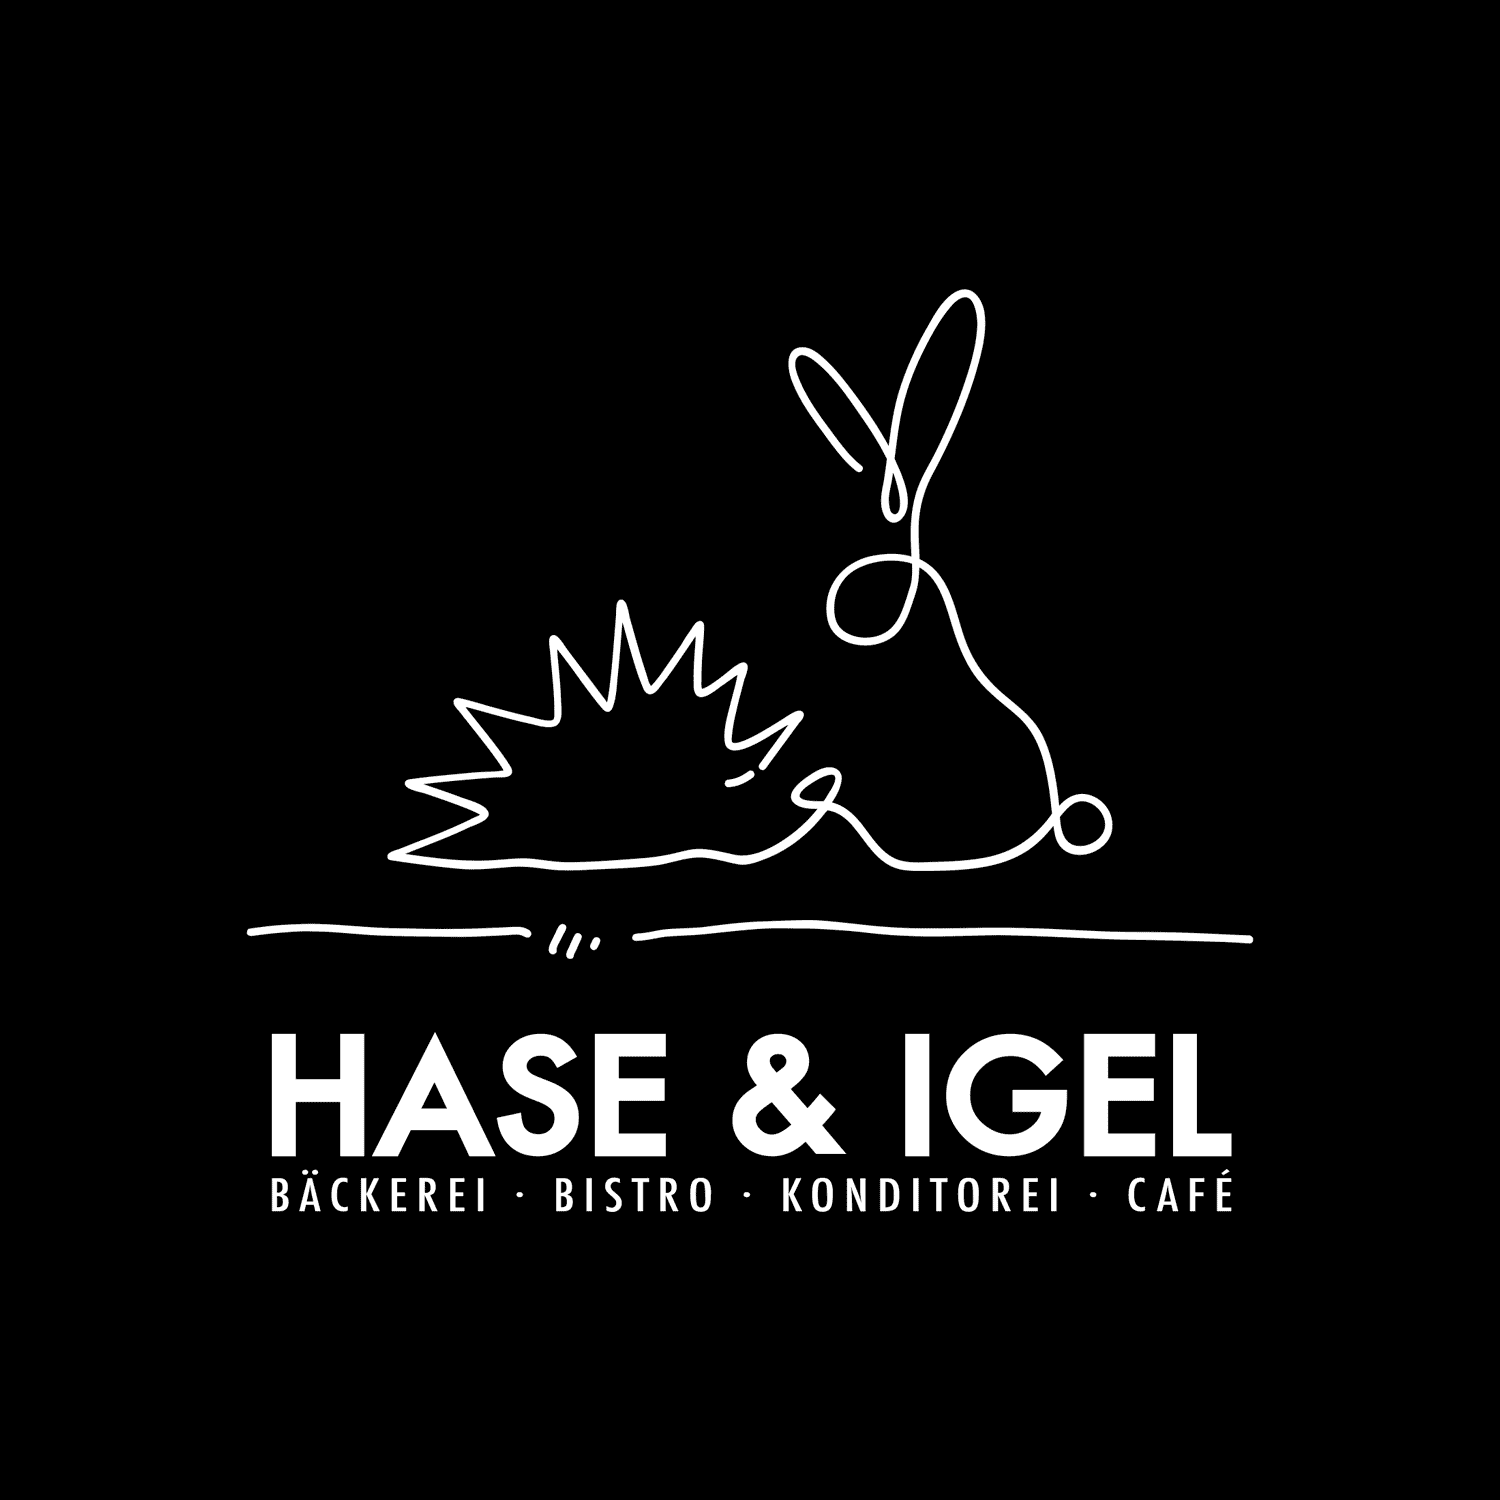 Kay Eickhoff | HASE & IGEL Bäckerei in Buxtehude – Corporate Design, Logo.